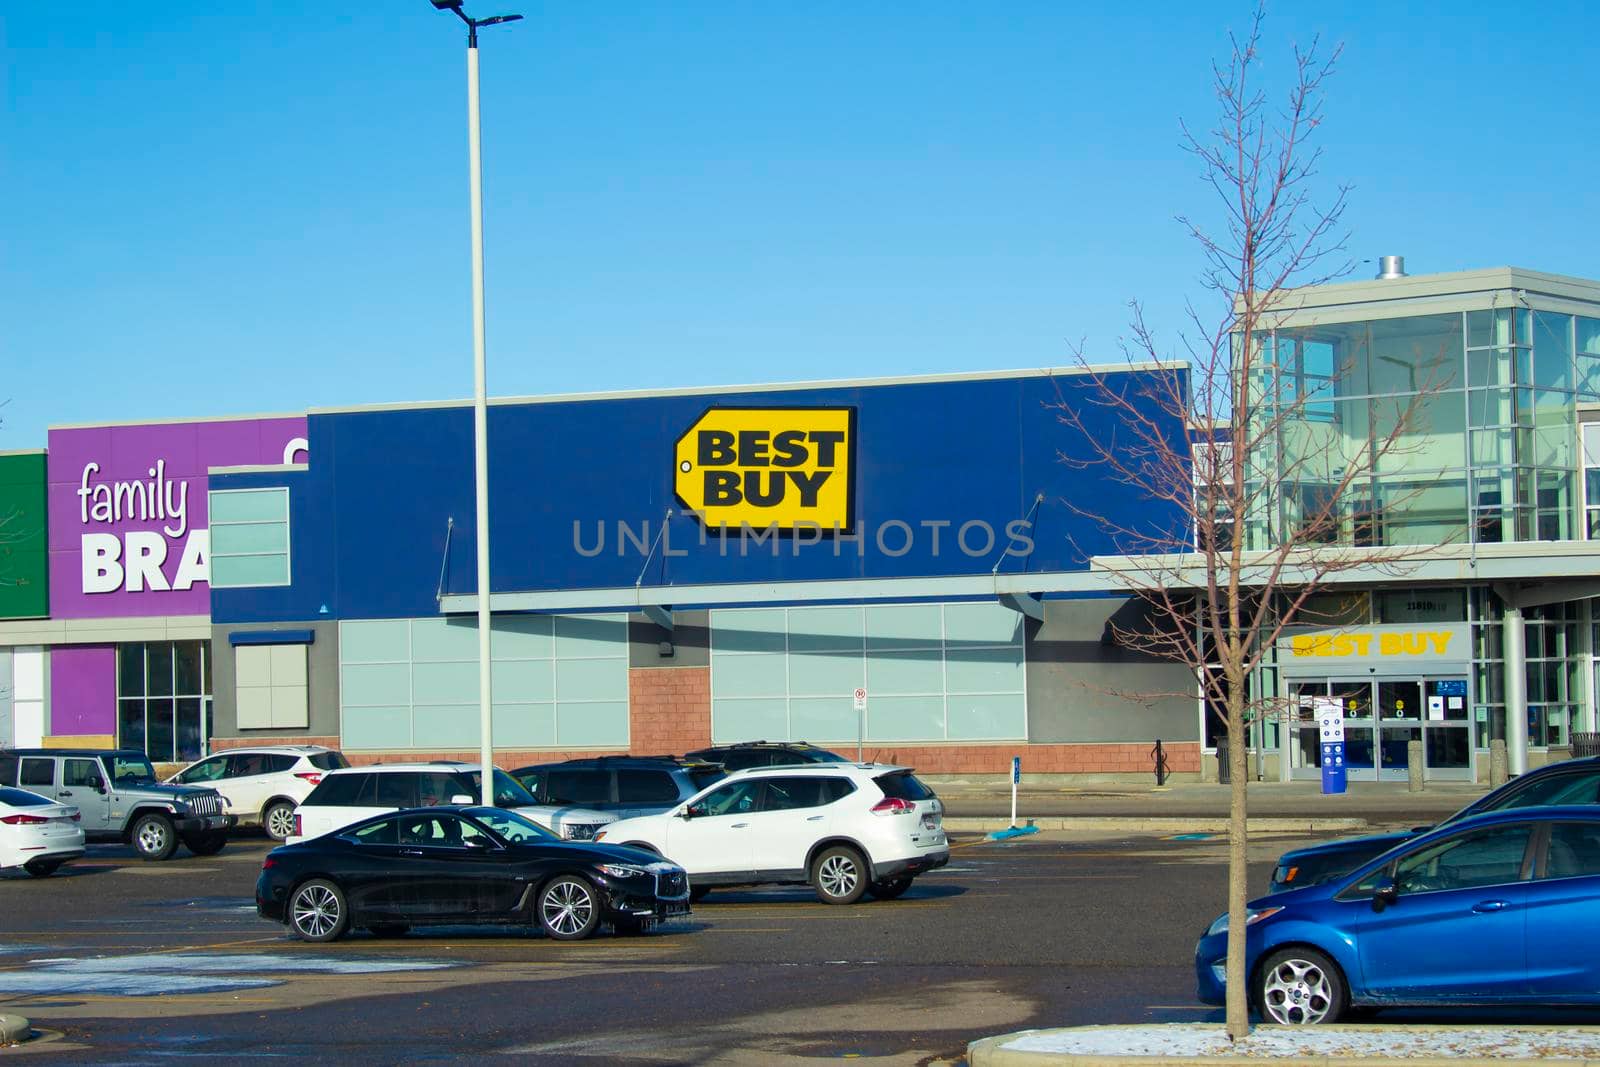 Calgary Alberta, Canada. Oct 17, 2020. Best Buy is an American multinational consumer electronics retailer headquartered in Richfield, Minnesota. by oasisamuel